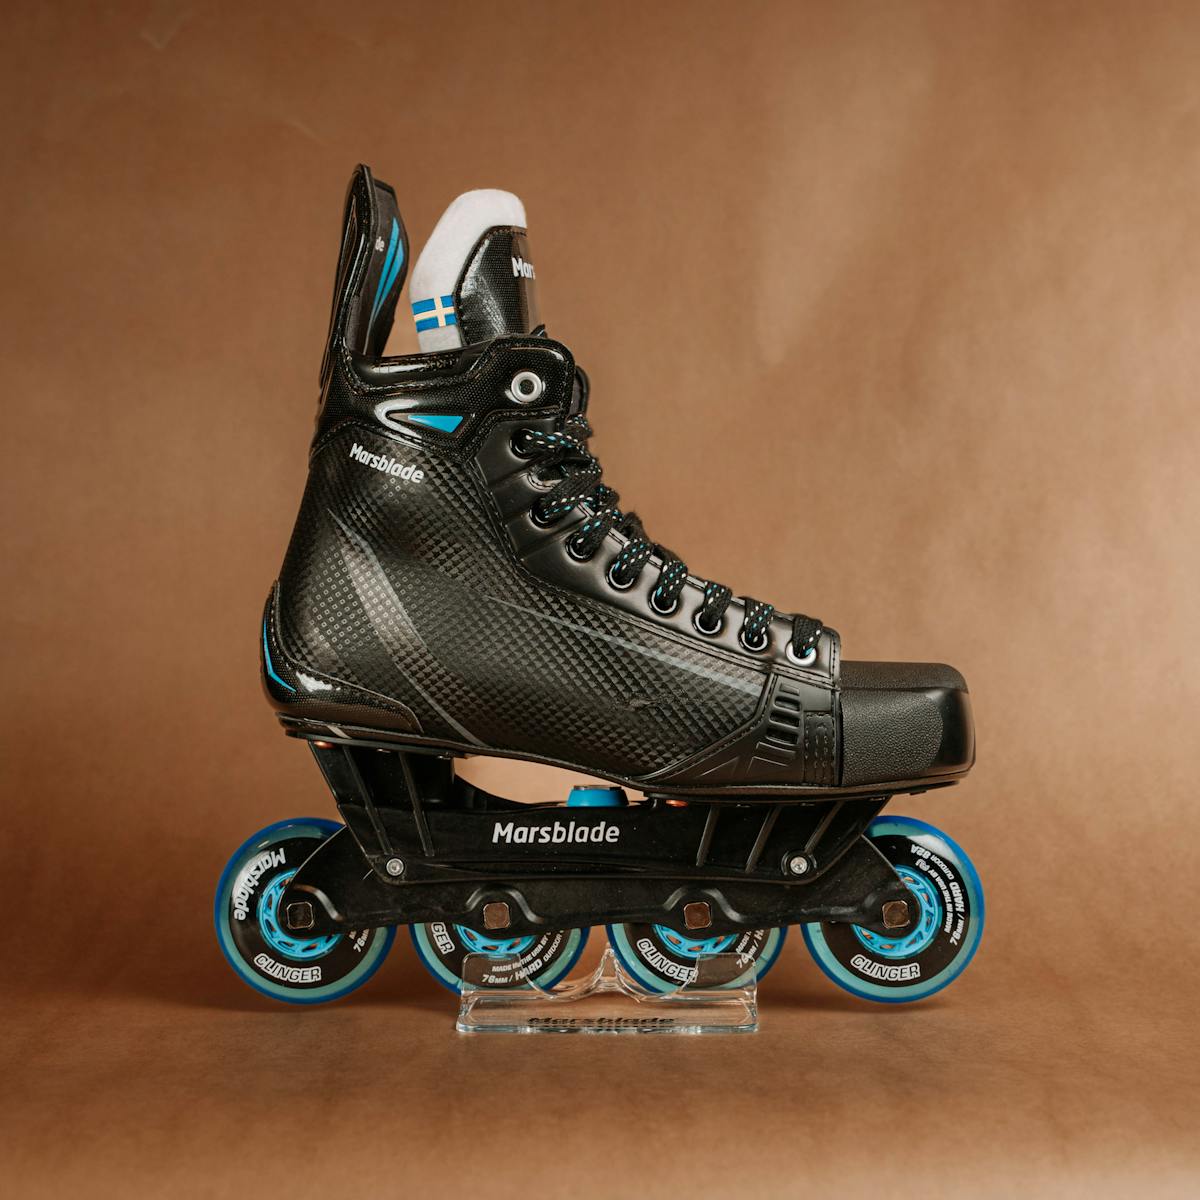 Marsblade Re:skate Pro